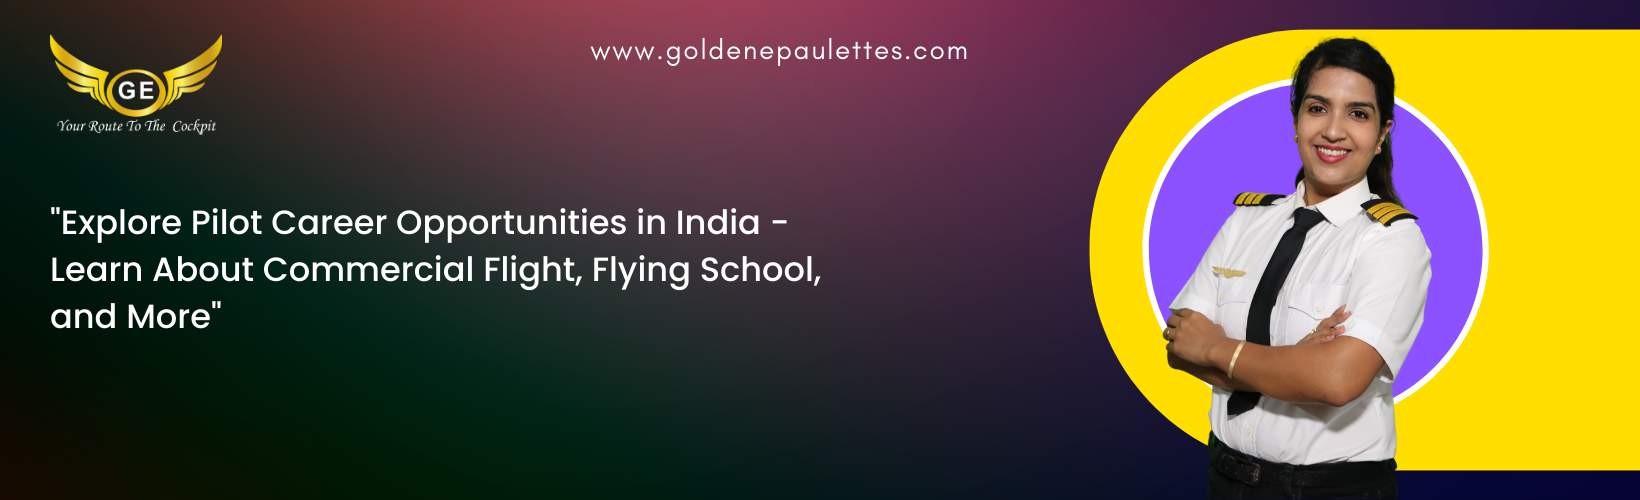 Pilot Career Opportunities in India